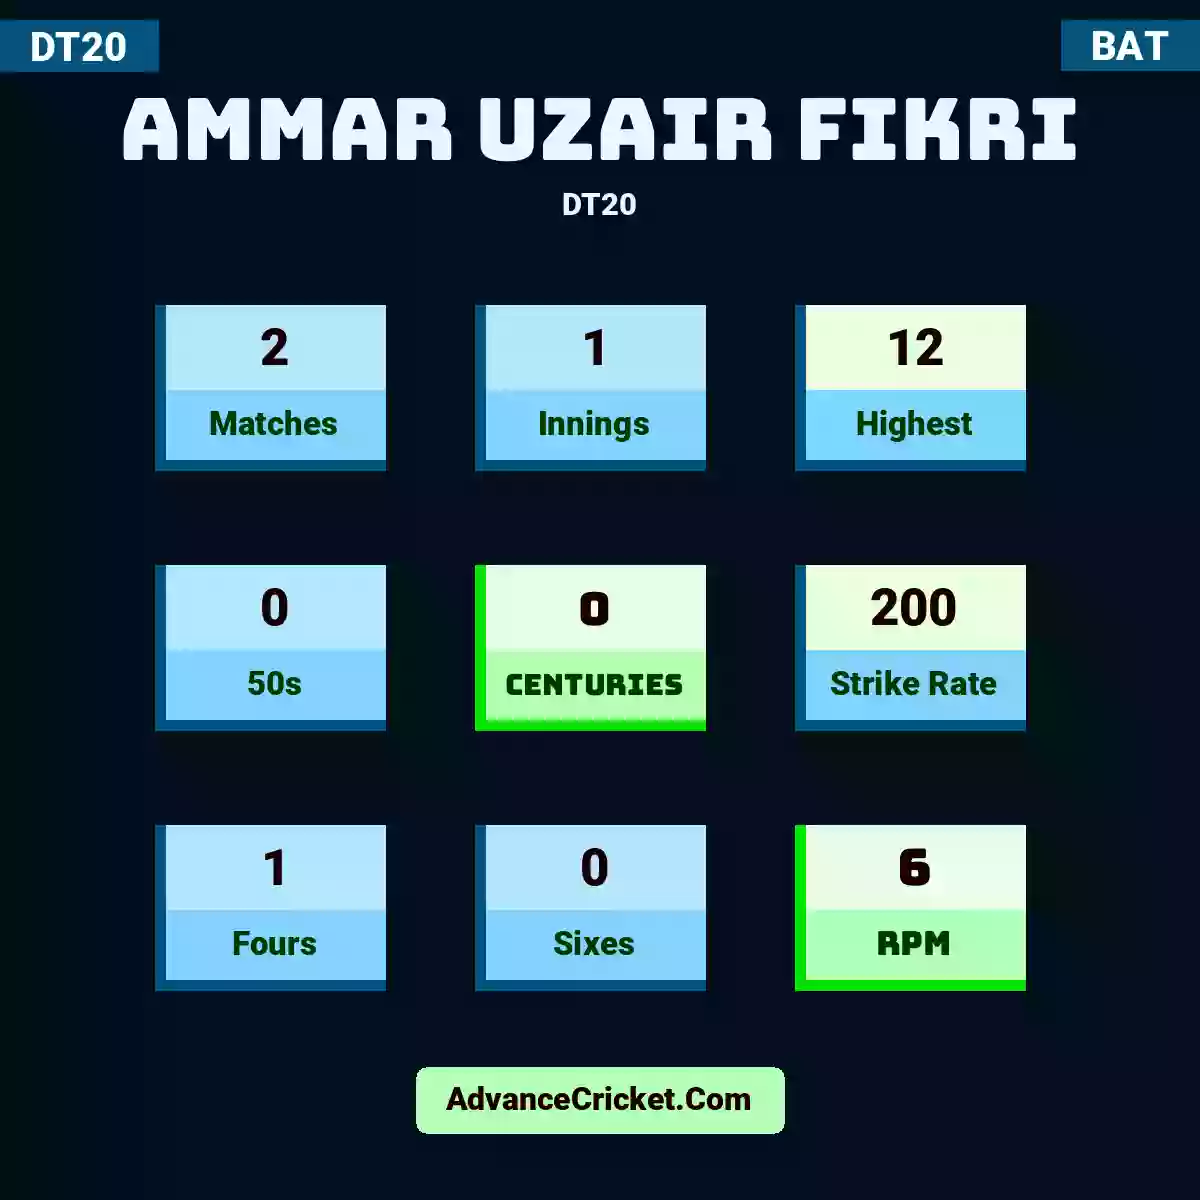 Ammar Uzair Fikri DT20 , Ammar Uzair Fikri played 2 matches, scored 12 runs as highest, 0 half-centuries, and 0 centuries, with a strike rate of 200. A.Uzair.Fikri hit 1 fours and 0 sixes, with an RPM of 6.